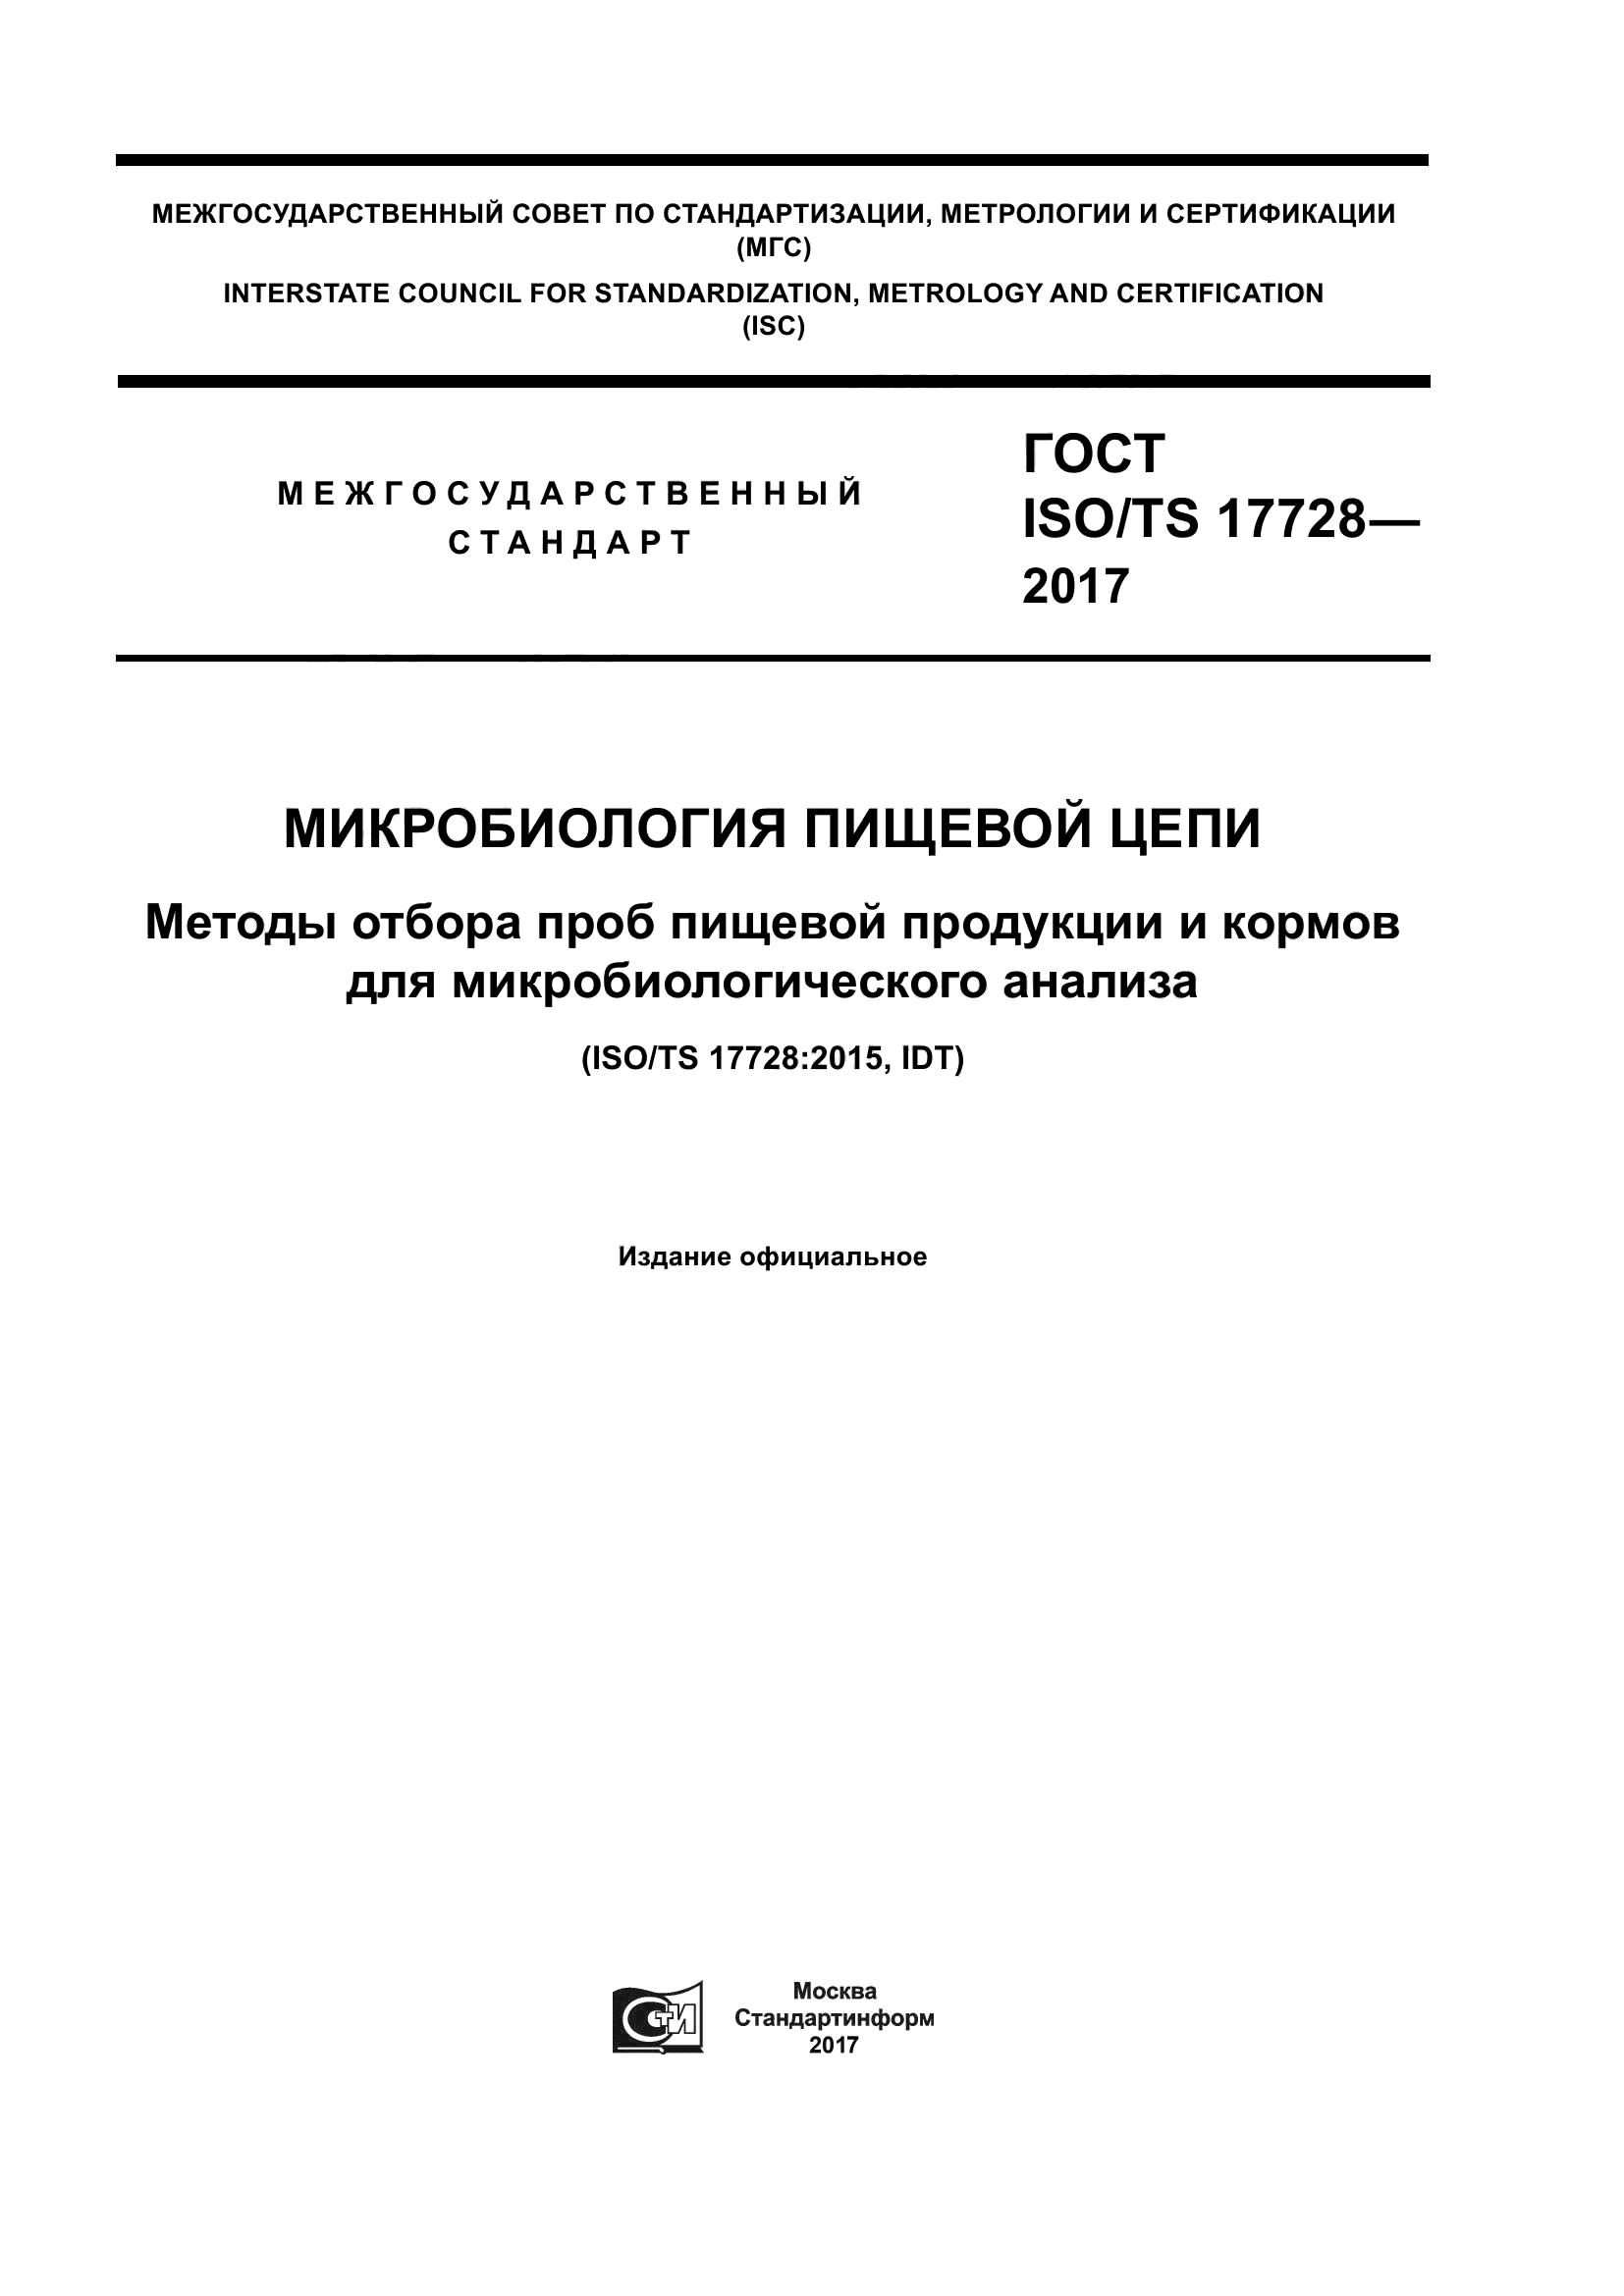 ГОСТ ISO/TS 17728-2017